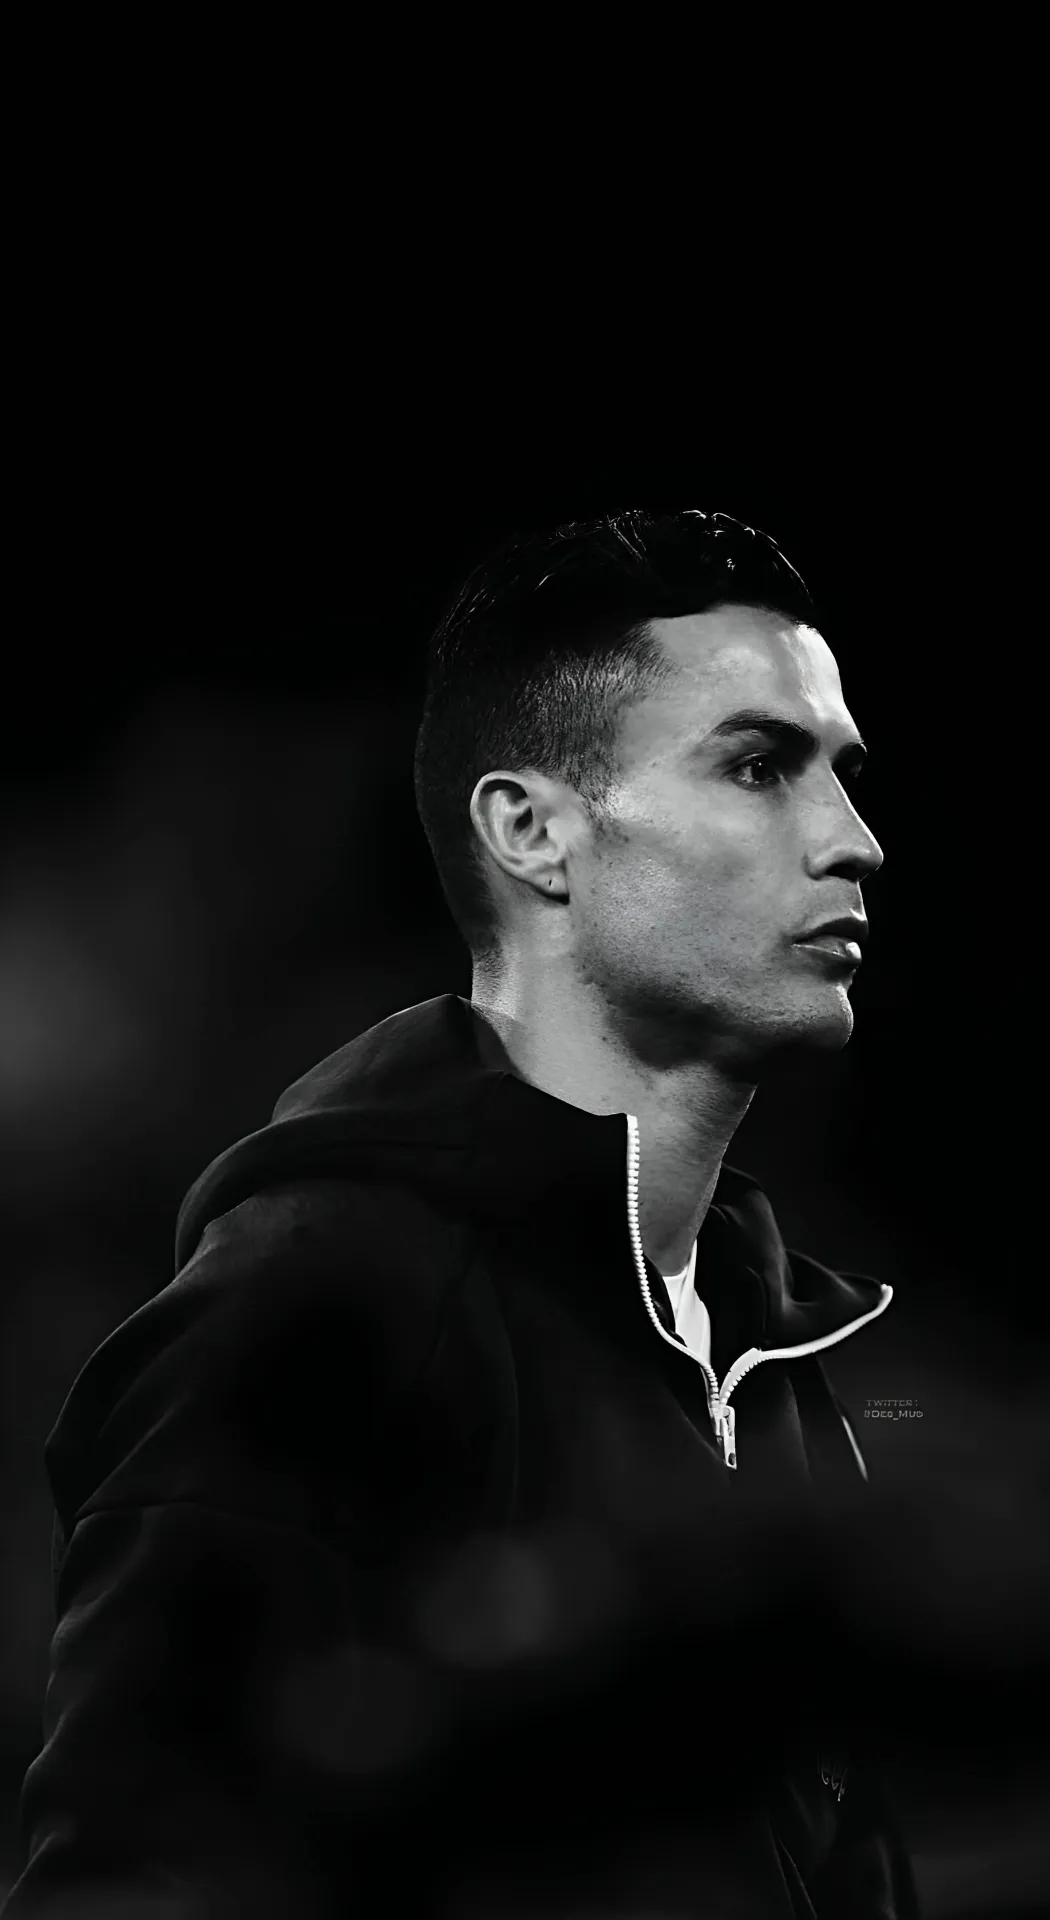 thumb for Cristiano Ronaldo Black And White Wallpaper